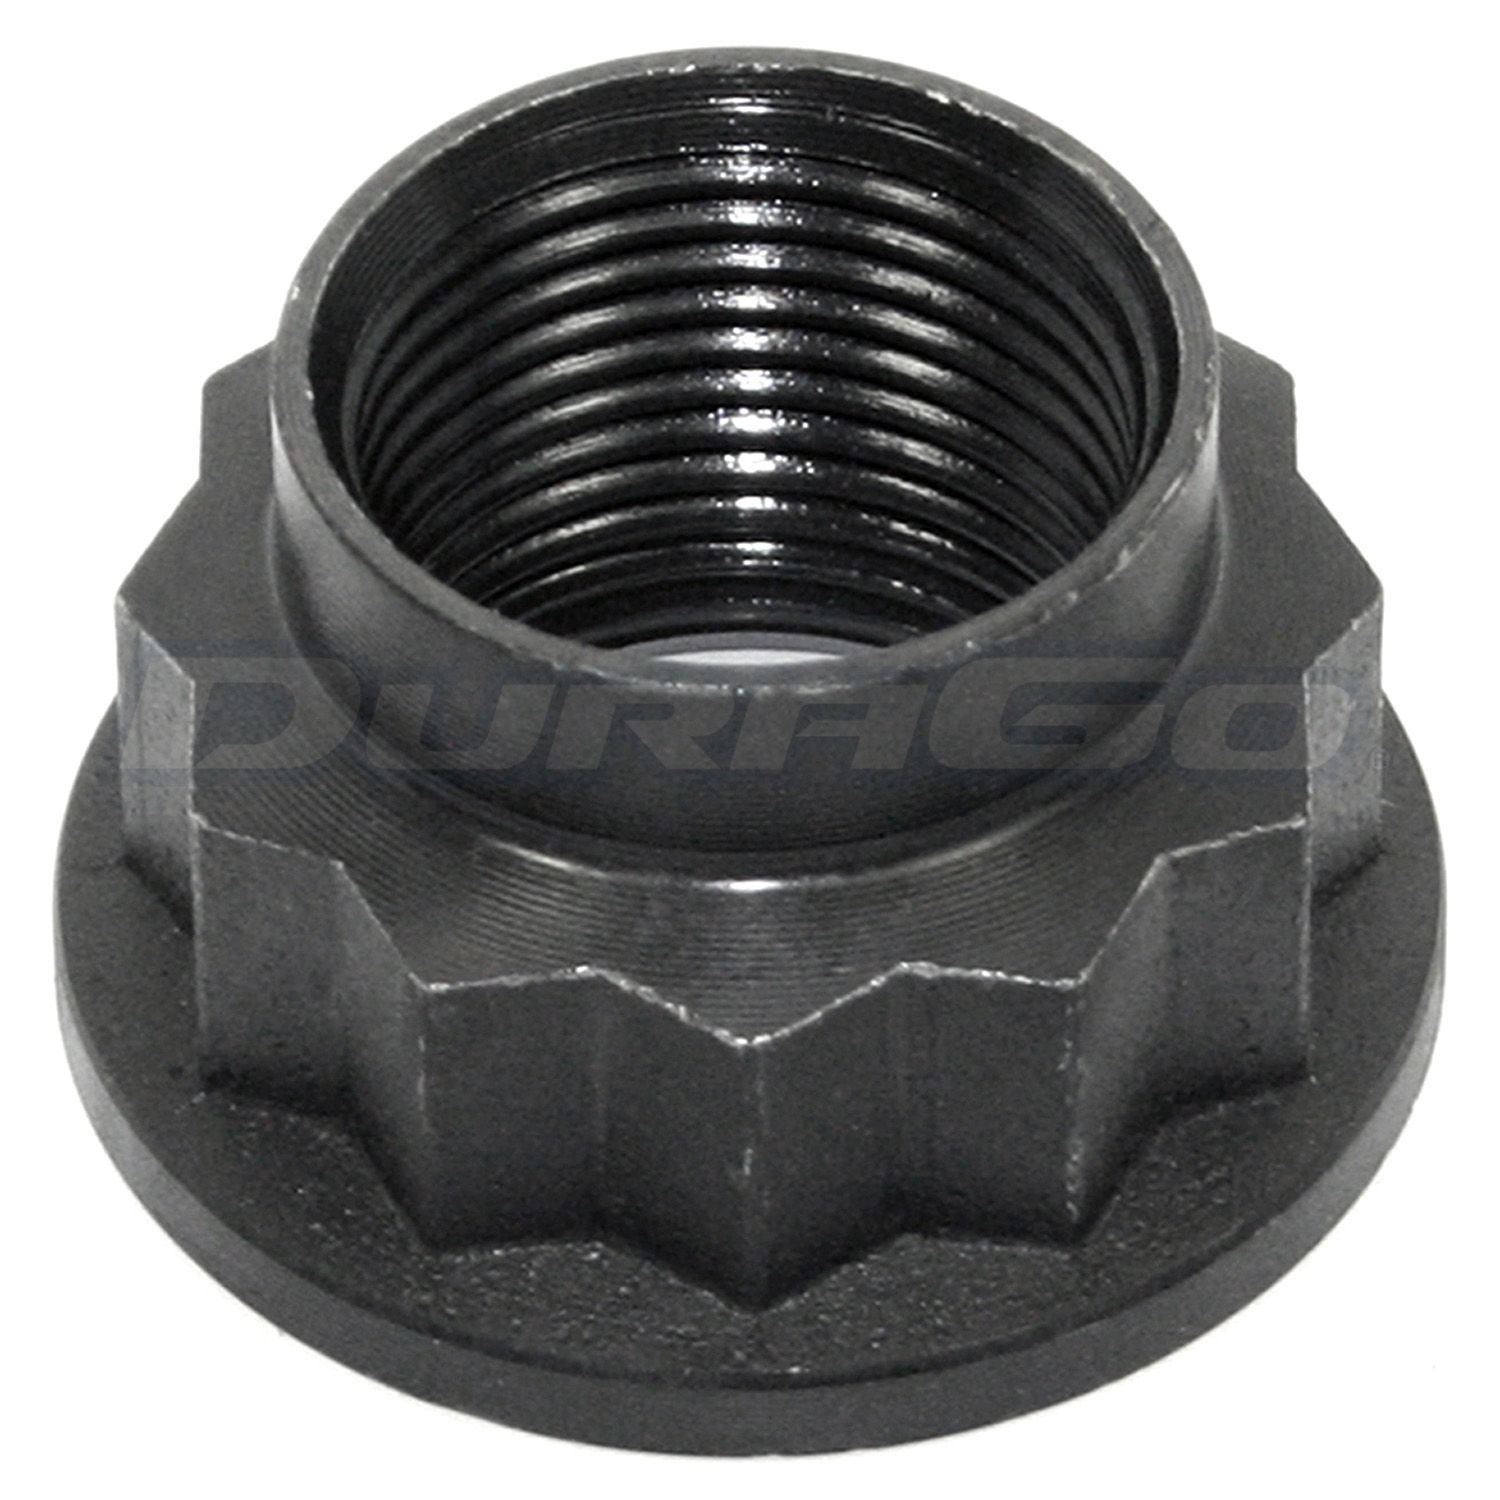 DURAGO - Axle Nut - D48 295-99032